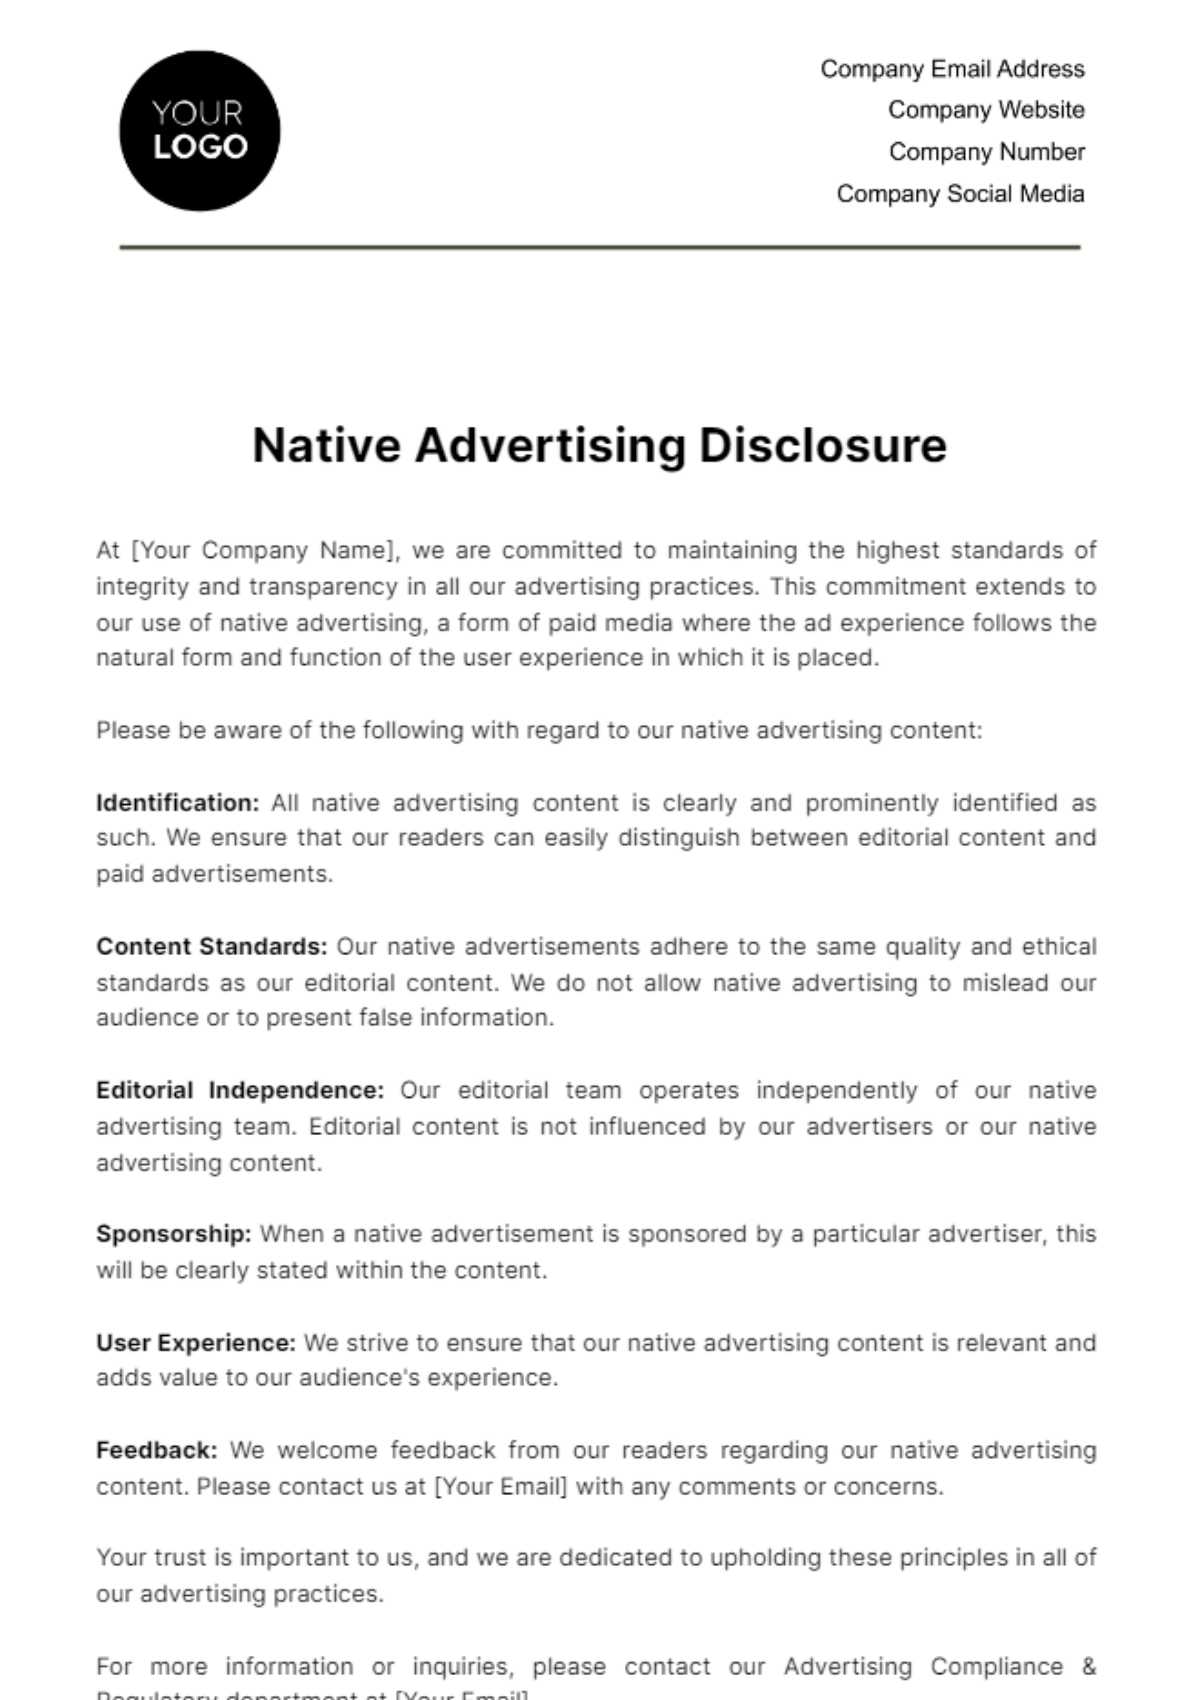 Native Advertising Disclosure Template